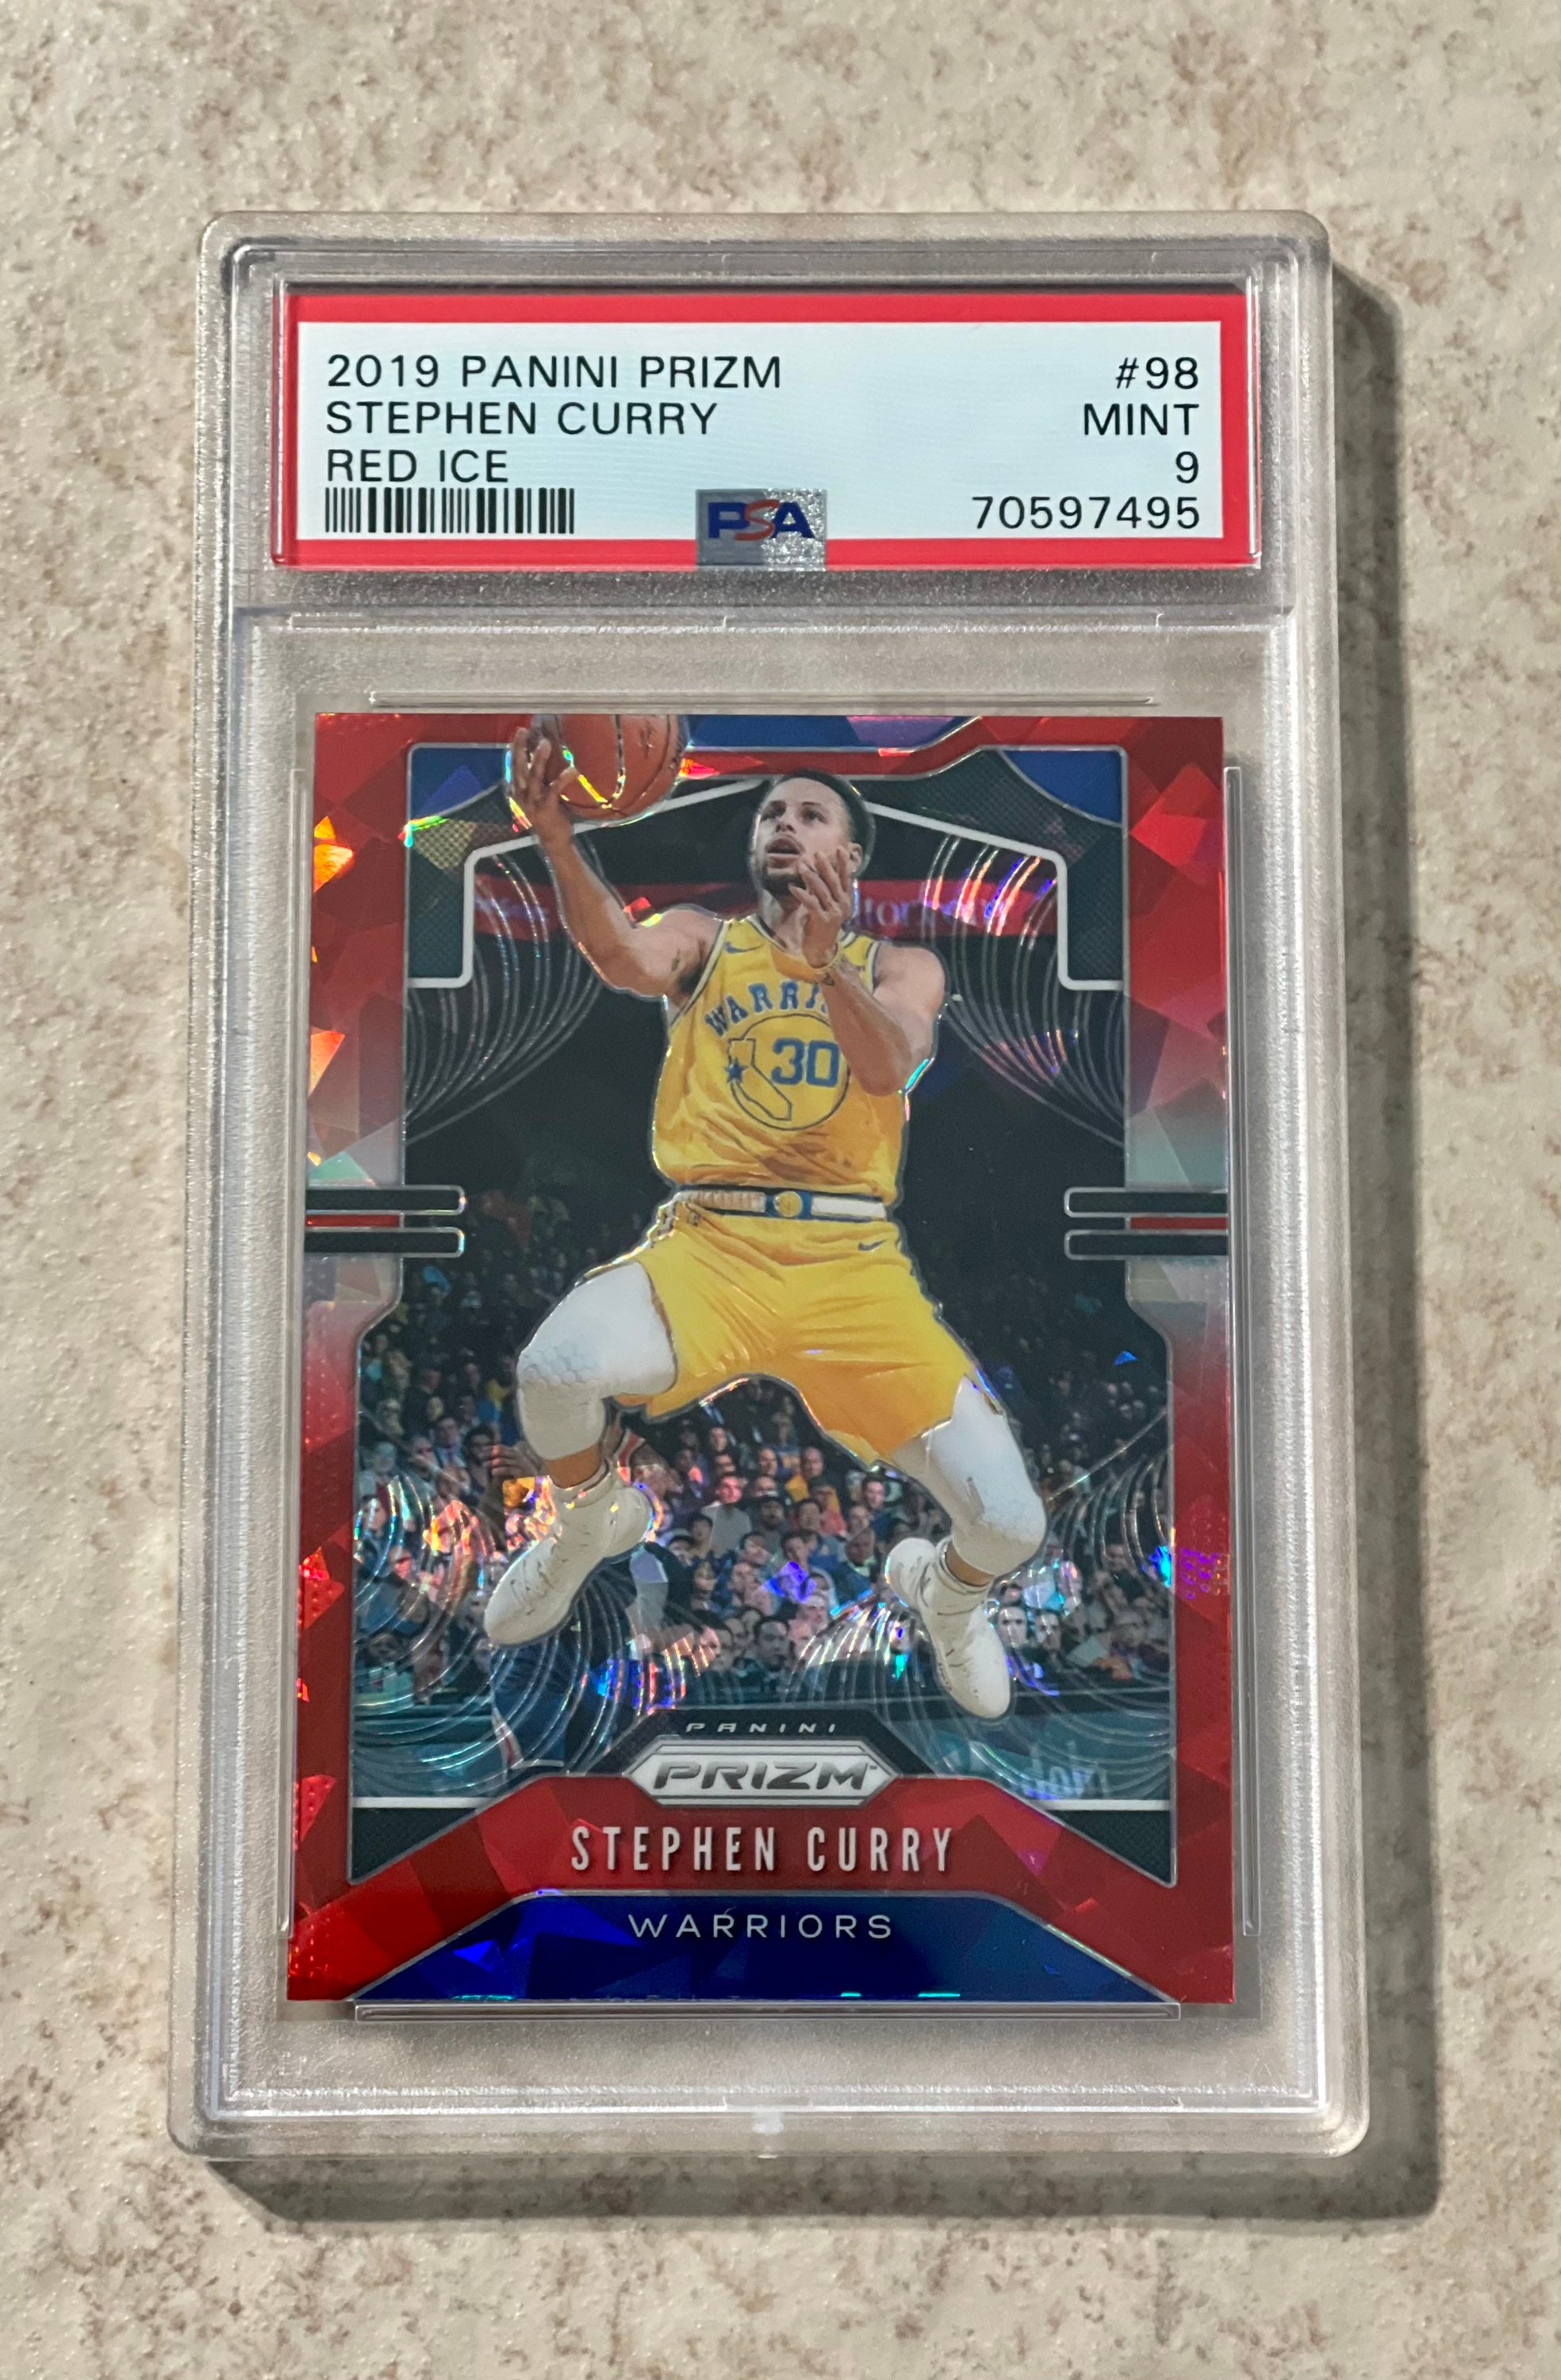 Stephen Curry 2019-20 NBA Hoops Premium Stock Card #59 Golden State  Warriors NBA